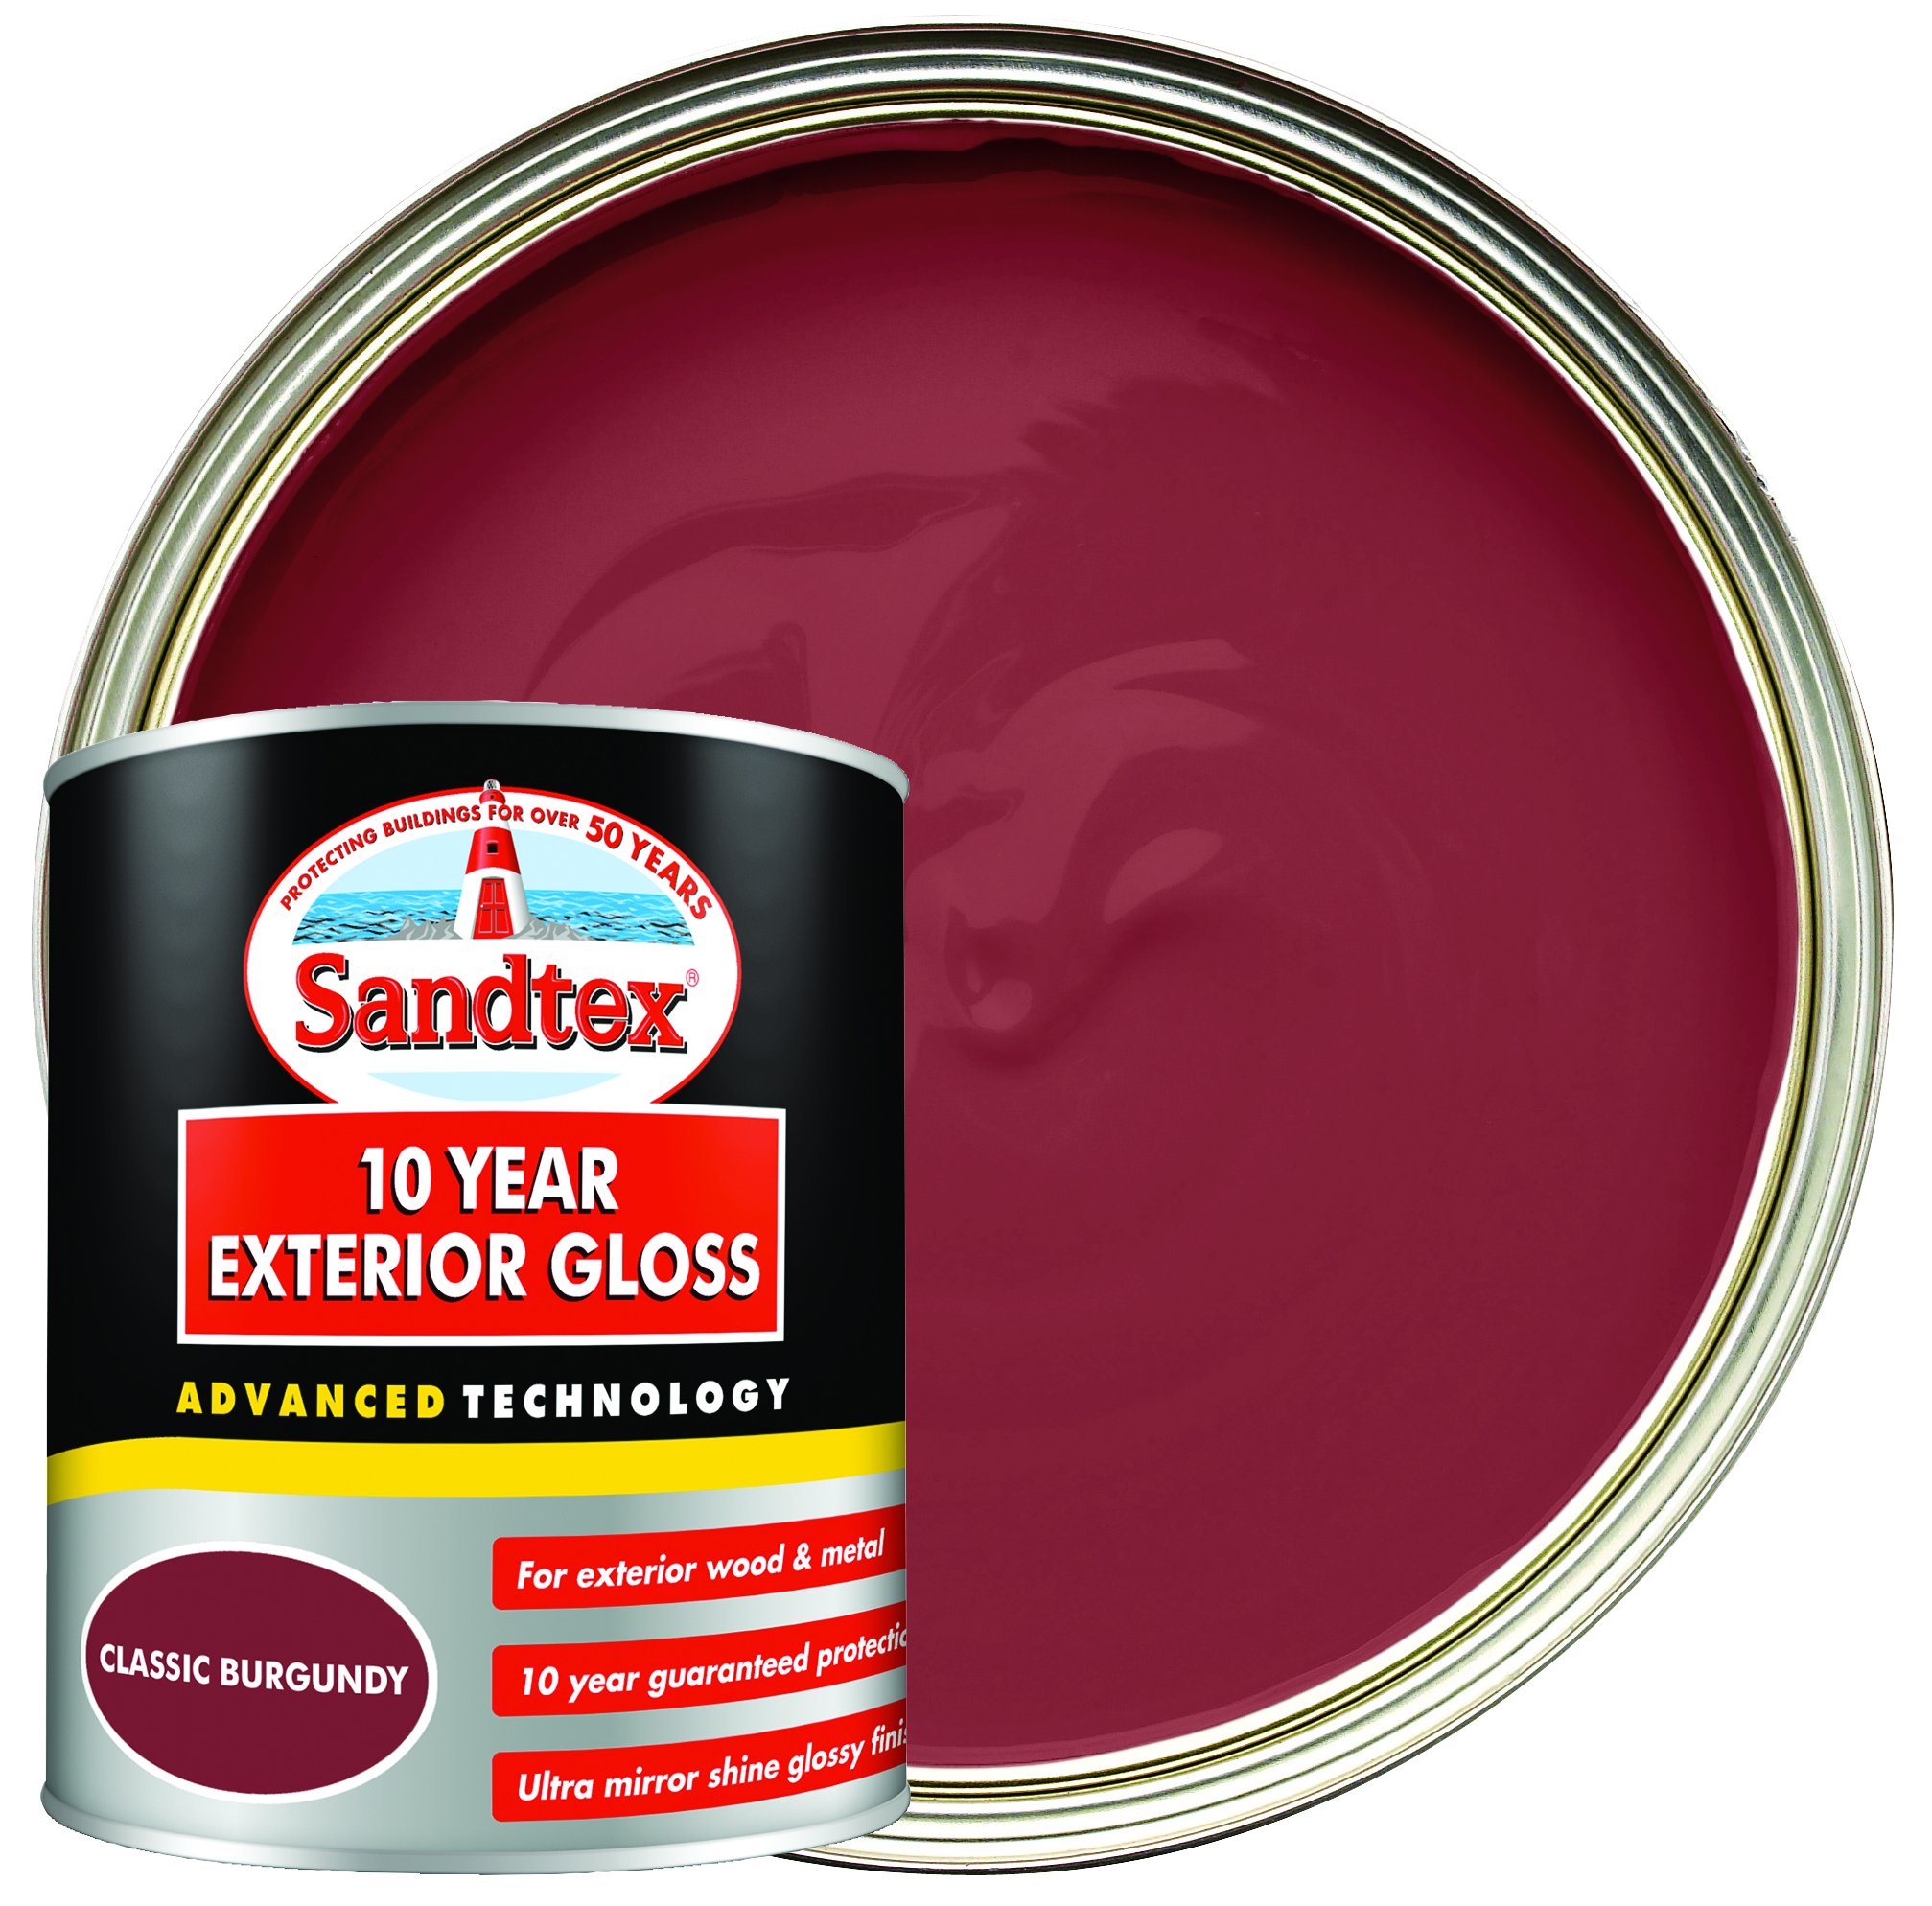 Image of Sandtex 10 Year Exterior Gloss Paint - Classic Burgundy - 750ml